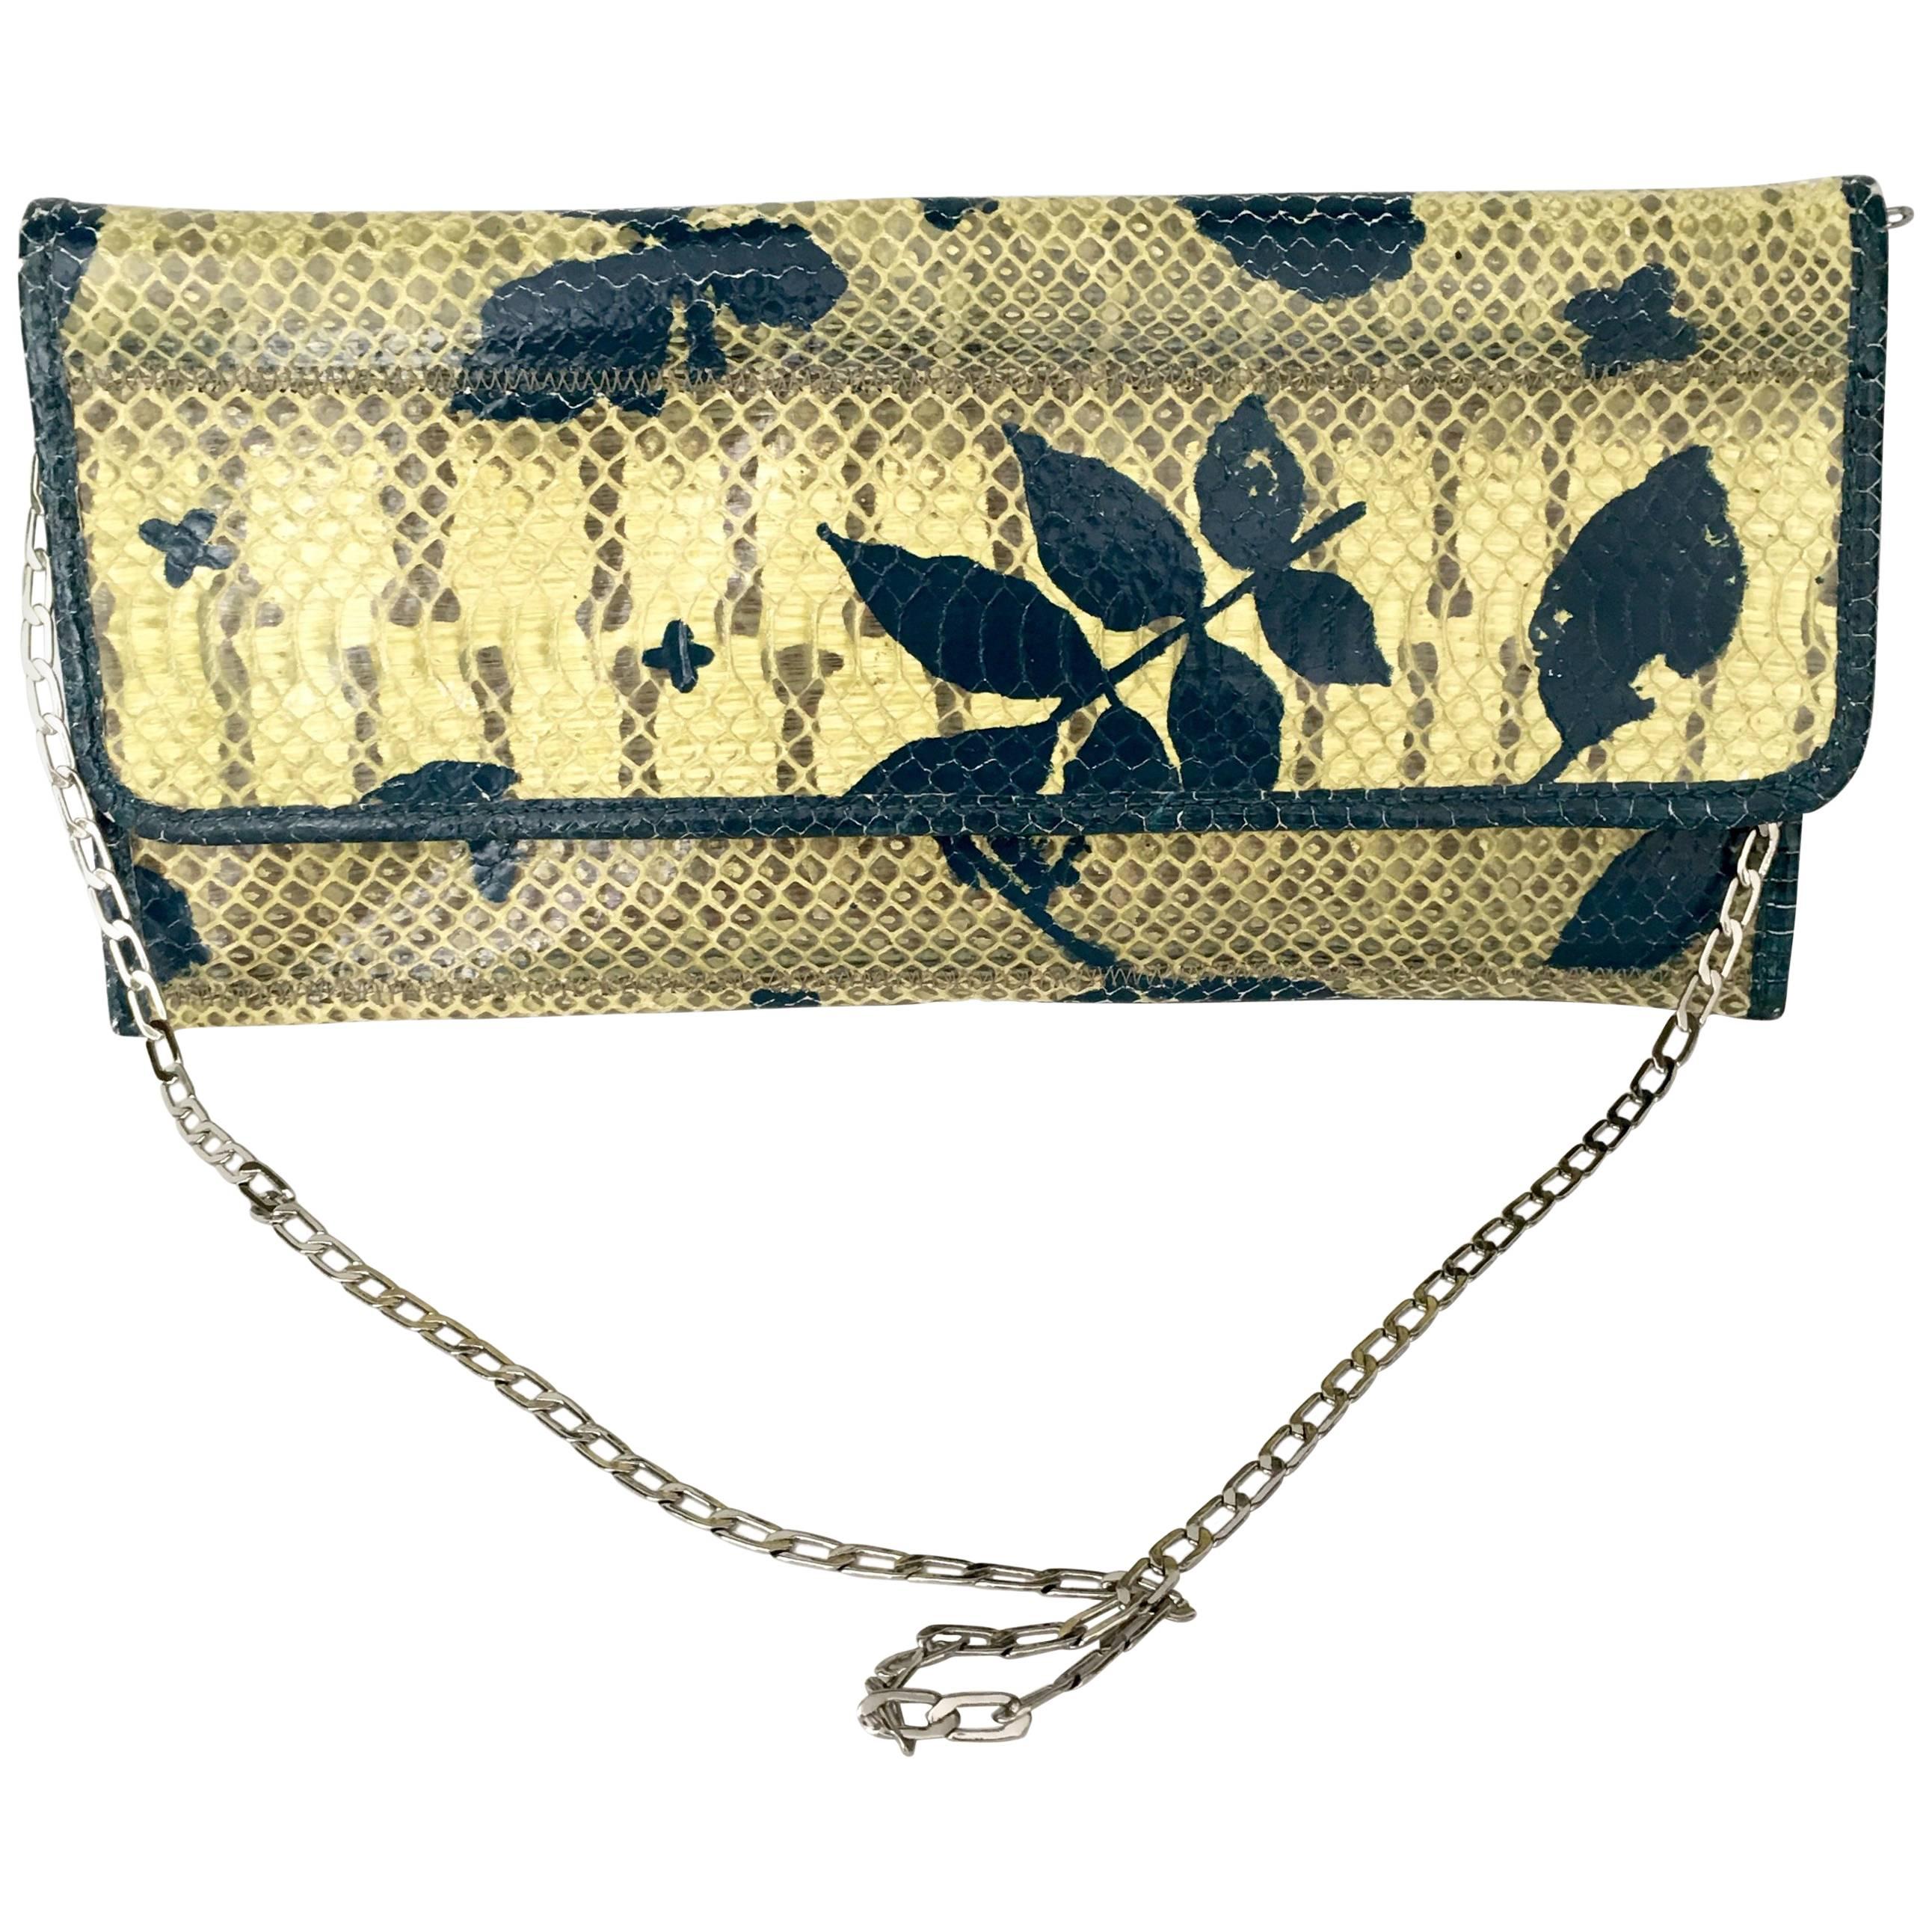 Vintage Carlos Falchi Hand-Painted Python Skin Clutch Handbag